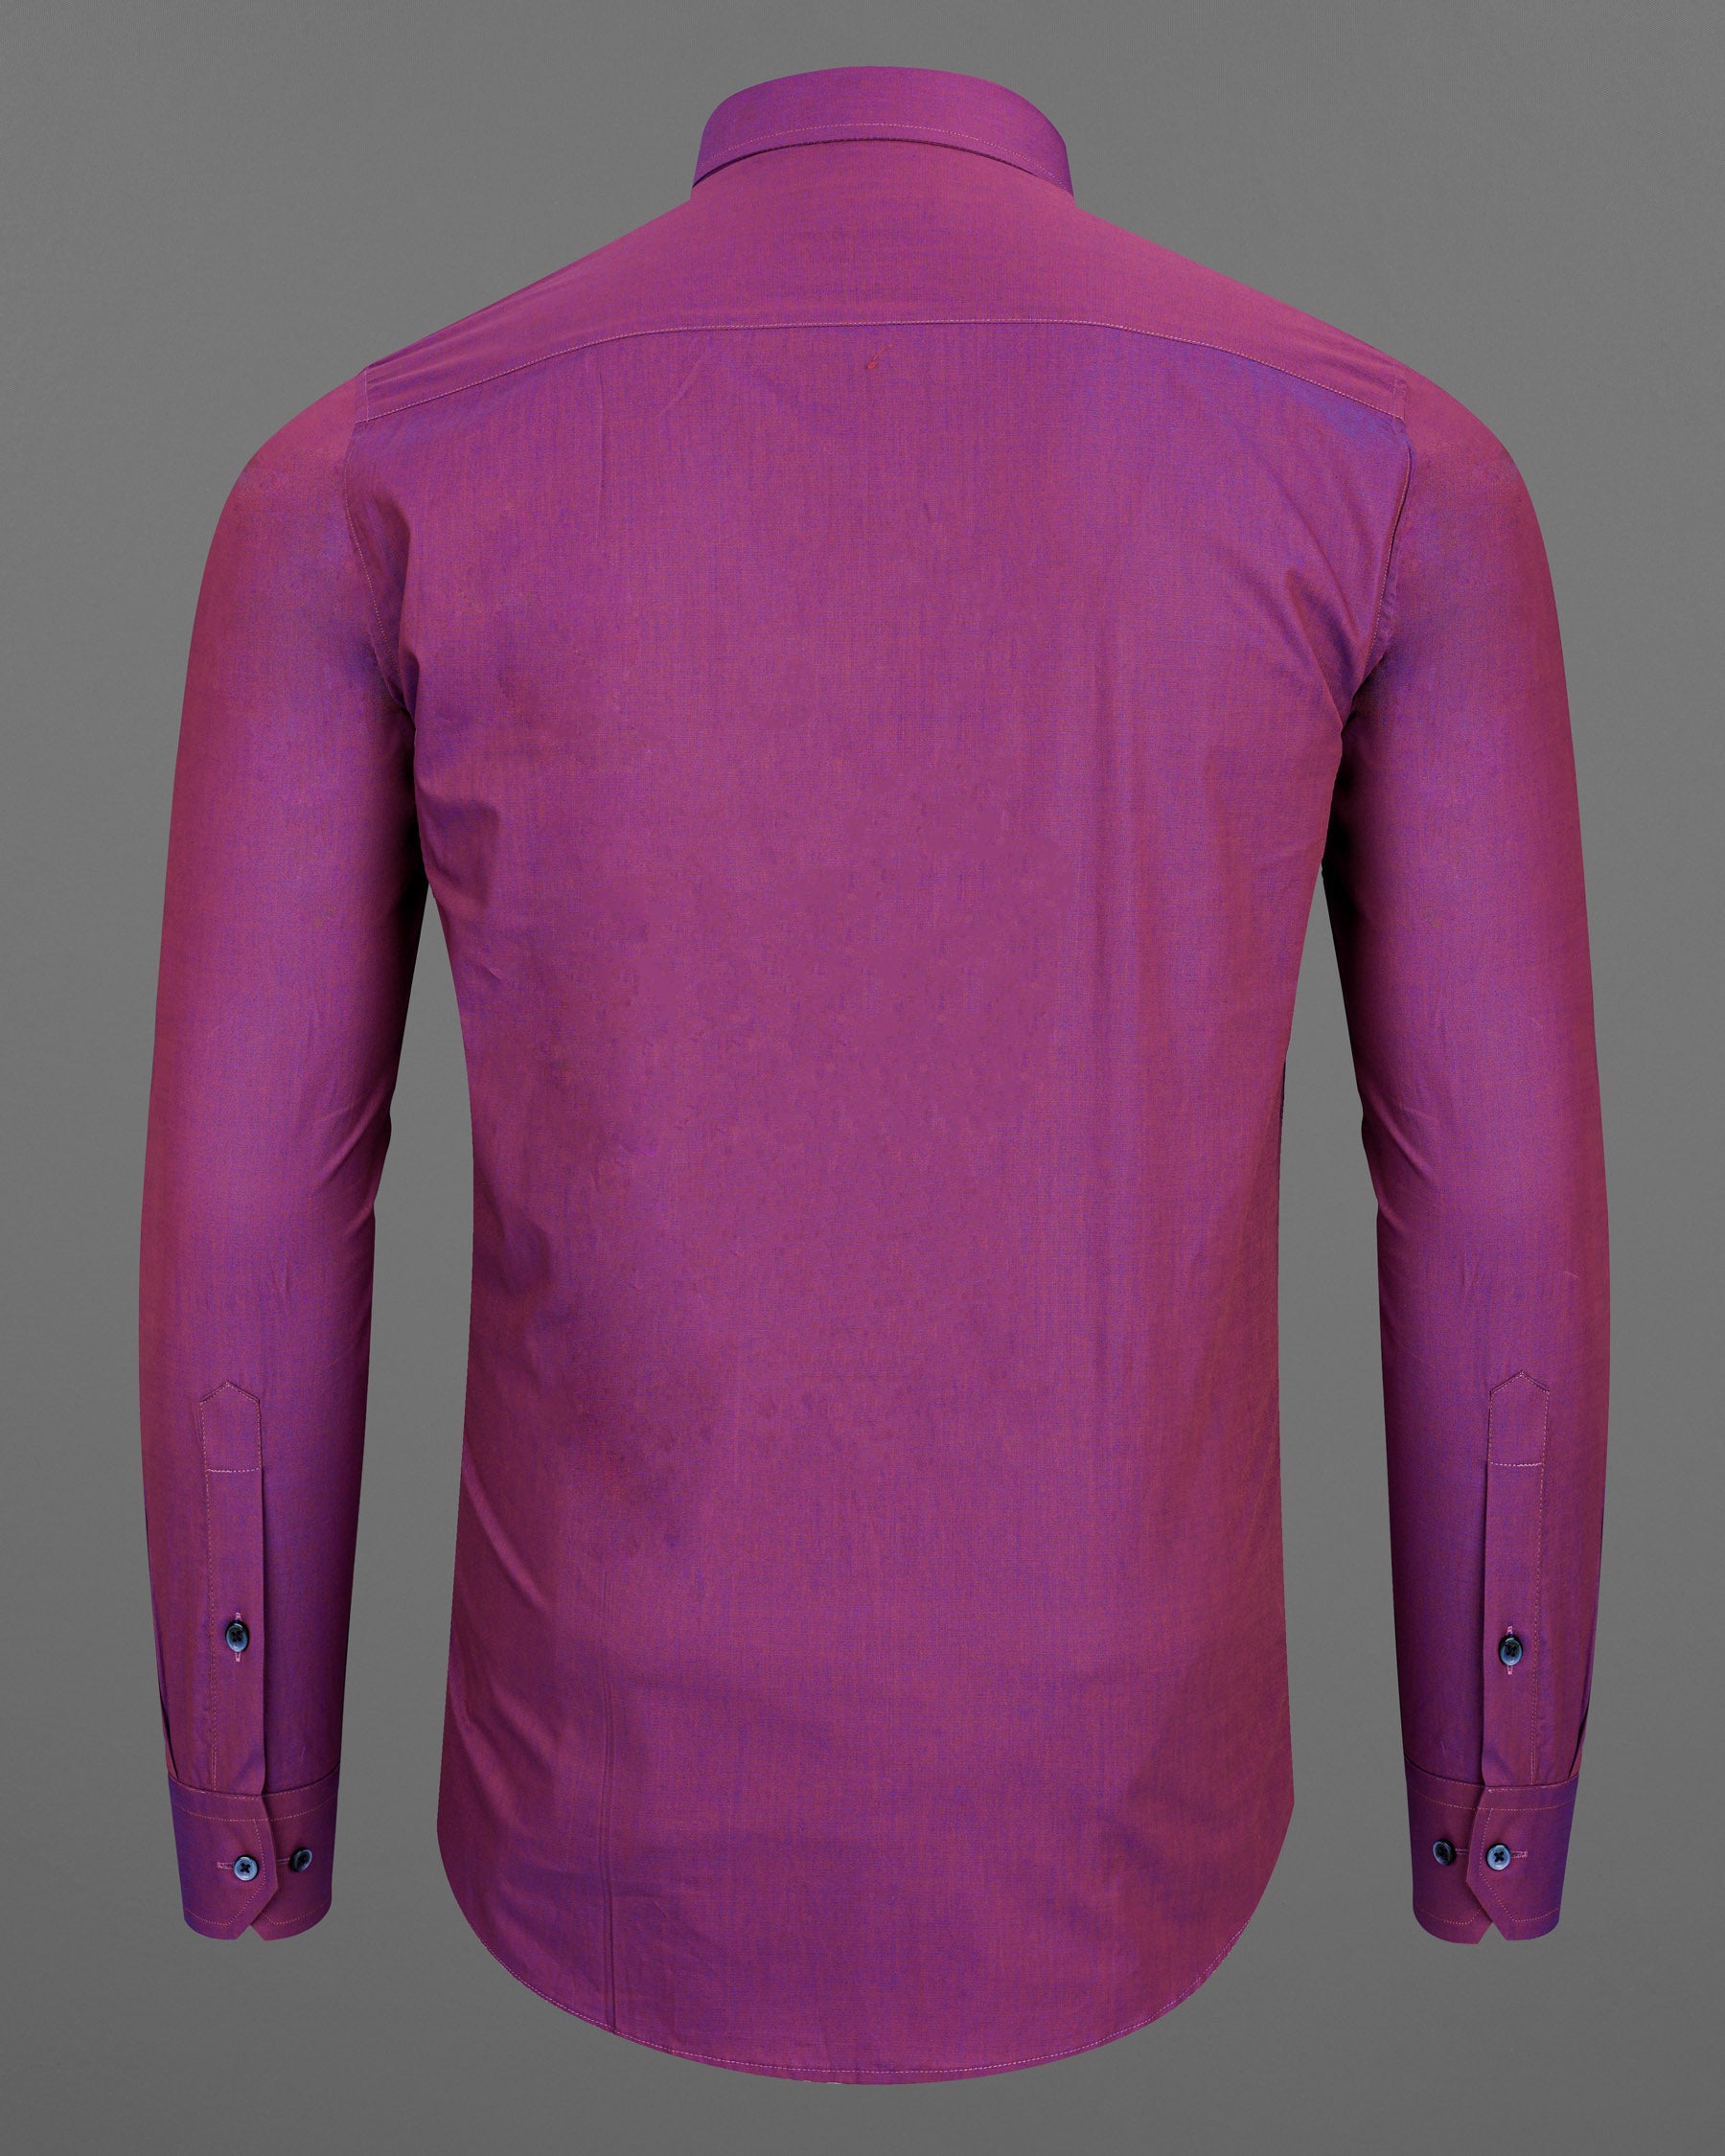 Byzantium Purple Chambray Textured Two-Tone Premium Cotton Shirt 7697-BLE-38,7697-BLE-38,7697-BLE-39,7697-BLE-39,7697-BLE-40,7697-BLE-40,7697-BLE-42,7697-BLE-42,7697-BLE-44,7697-BLE-44,7697-BLE-46,7697-BLE-46,7697-BLE-48,7697-BLE-48,7697-BLE-50,7697-BLE-50,7697-BLE-52,7697-BLE-52